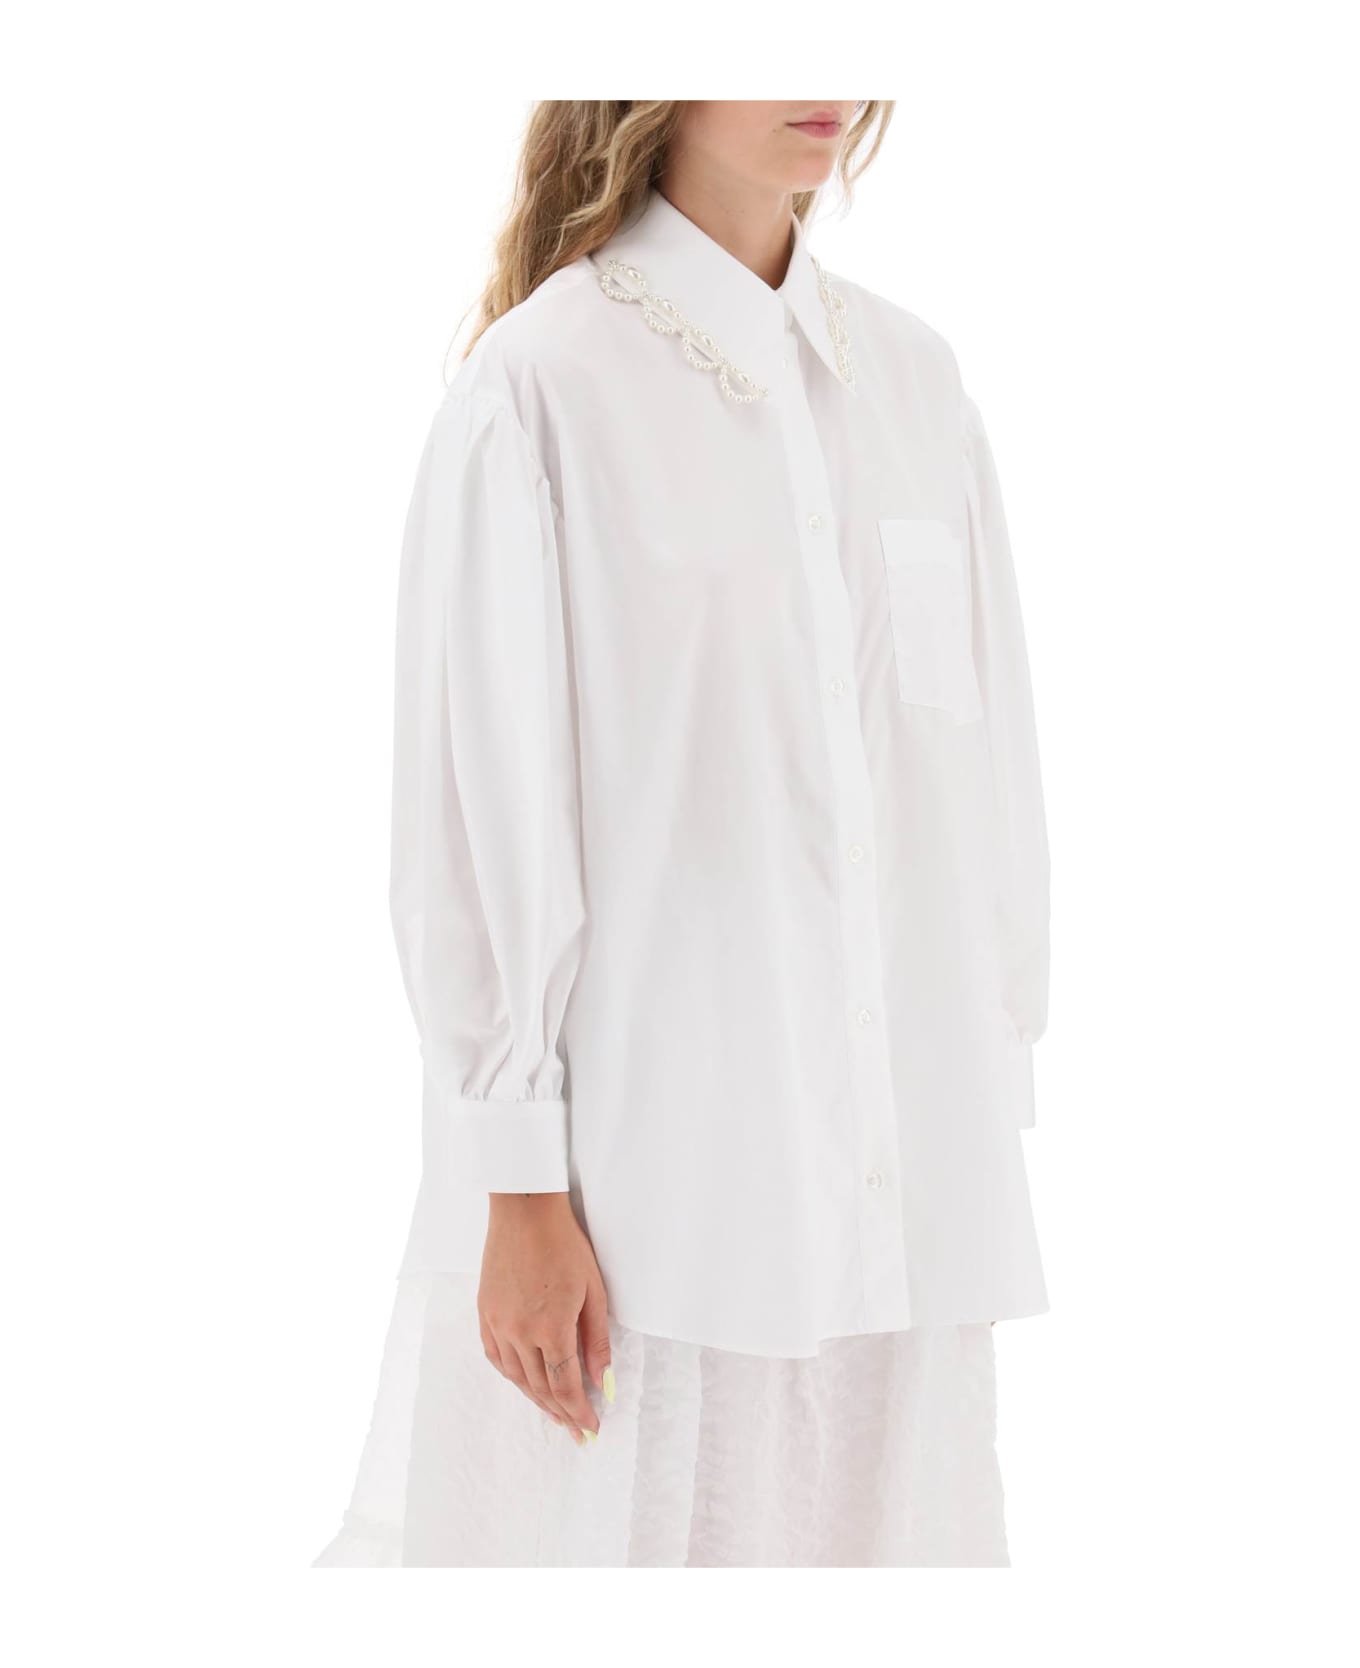 Simone Rocha Puff Sleeve Shirt With Embellishment - WHITE PEARL CLEAR (White) シャツ